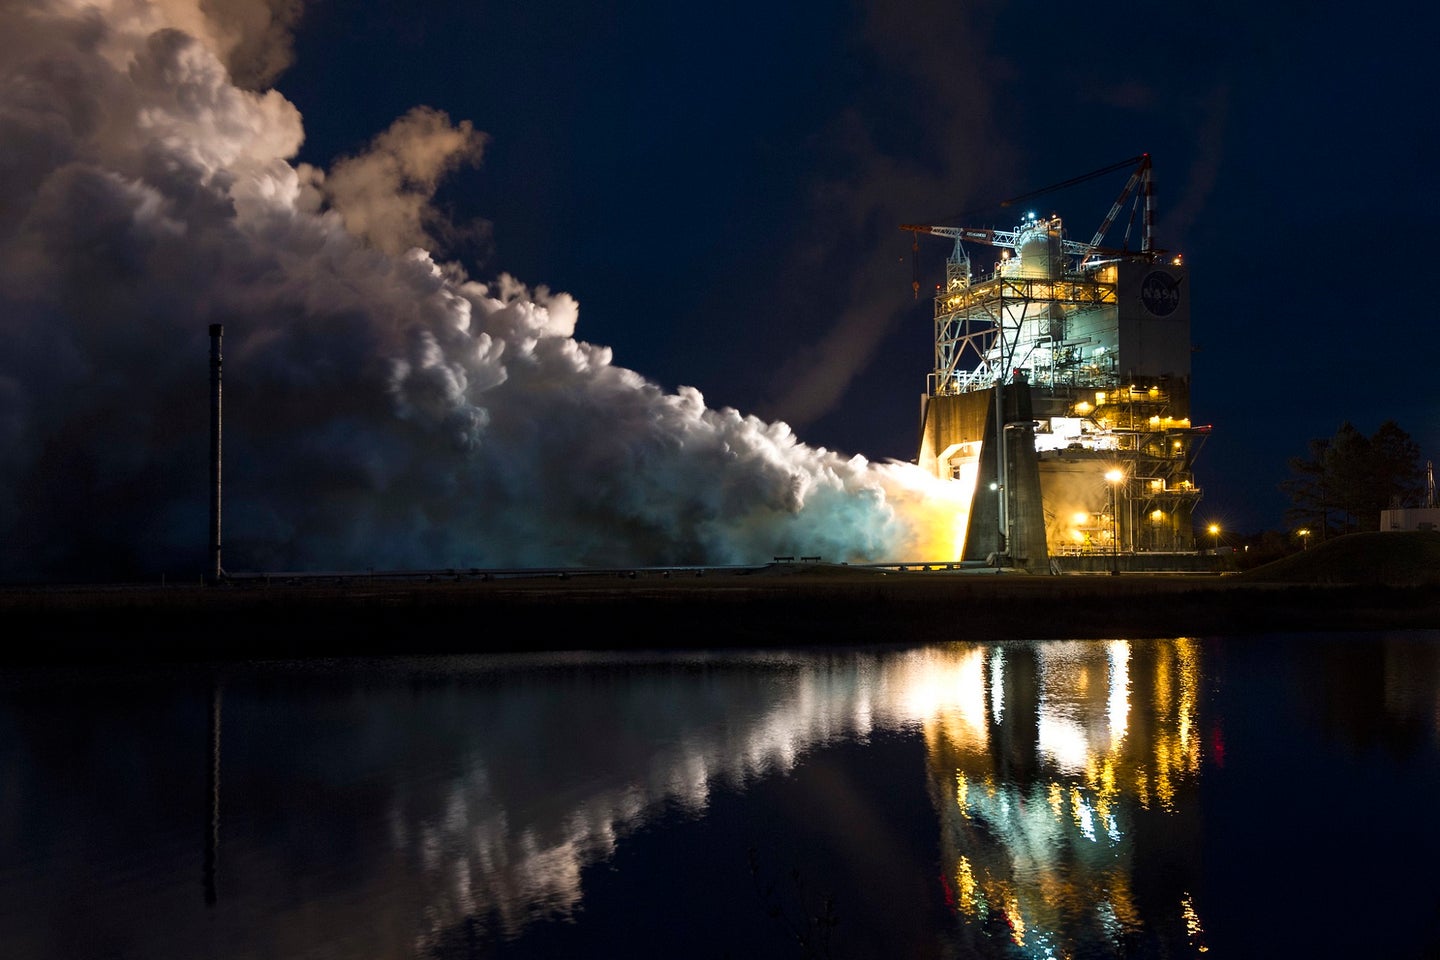 NASA SLS rocket engine test at Kennedy Space Center at night